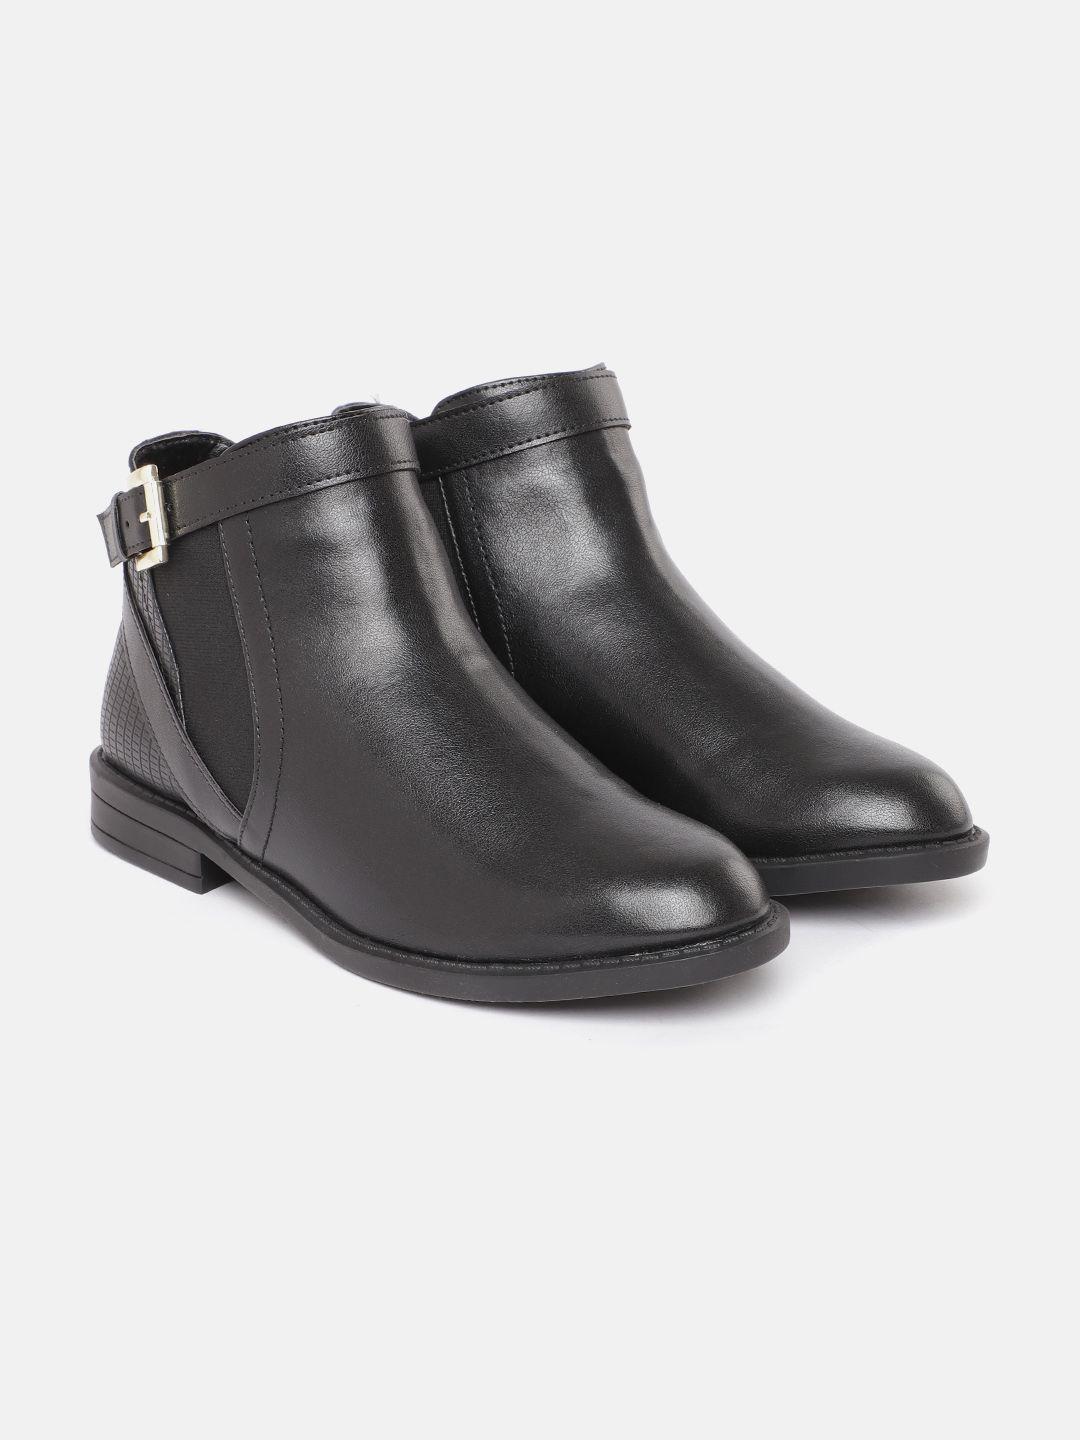 carlton-london-women-black-solid-mid-top-chelsea-boots